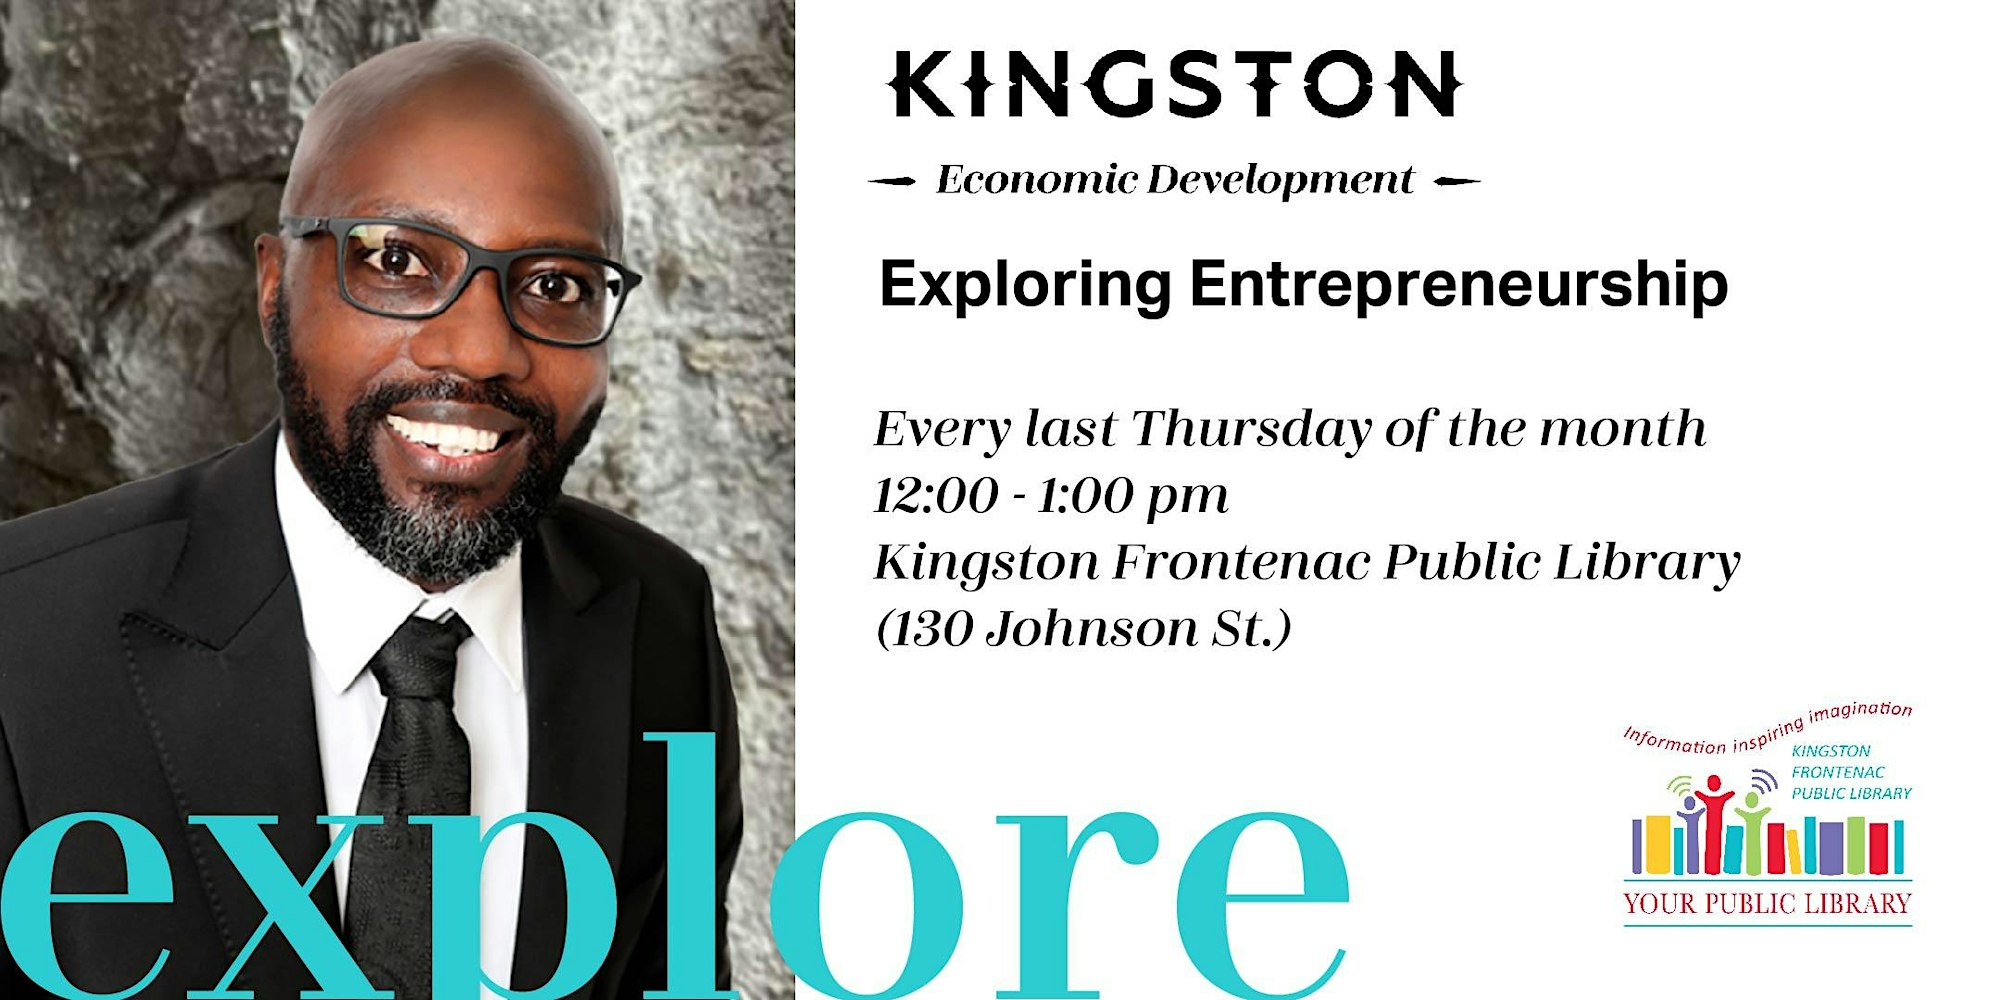 KINGSTON - Economic Development Exploring Entrepreneurship Every last Thursday of the month 12:00 - 1:00 pm Kingston Frontenac Public Library (130 Johnson St.) with an image of Norman Musengimana.